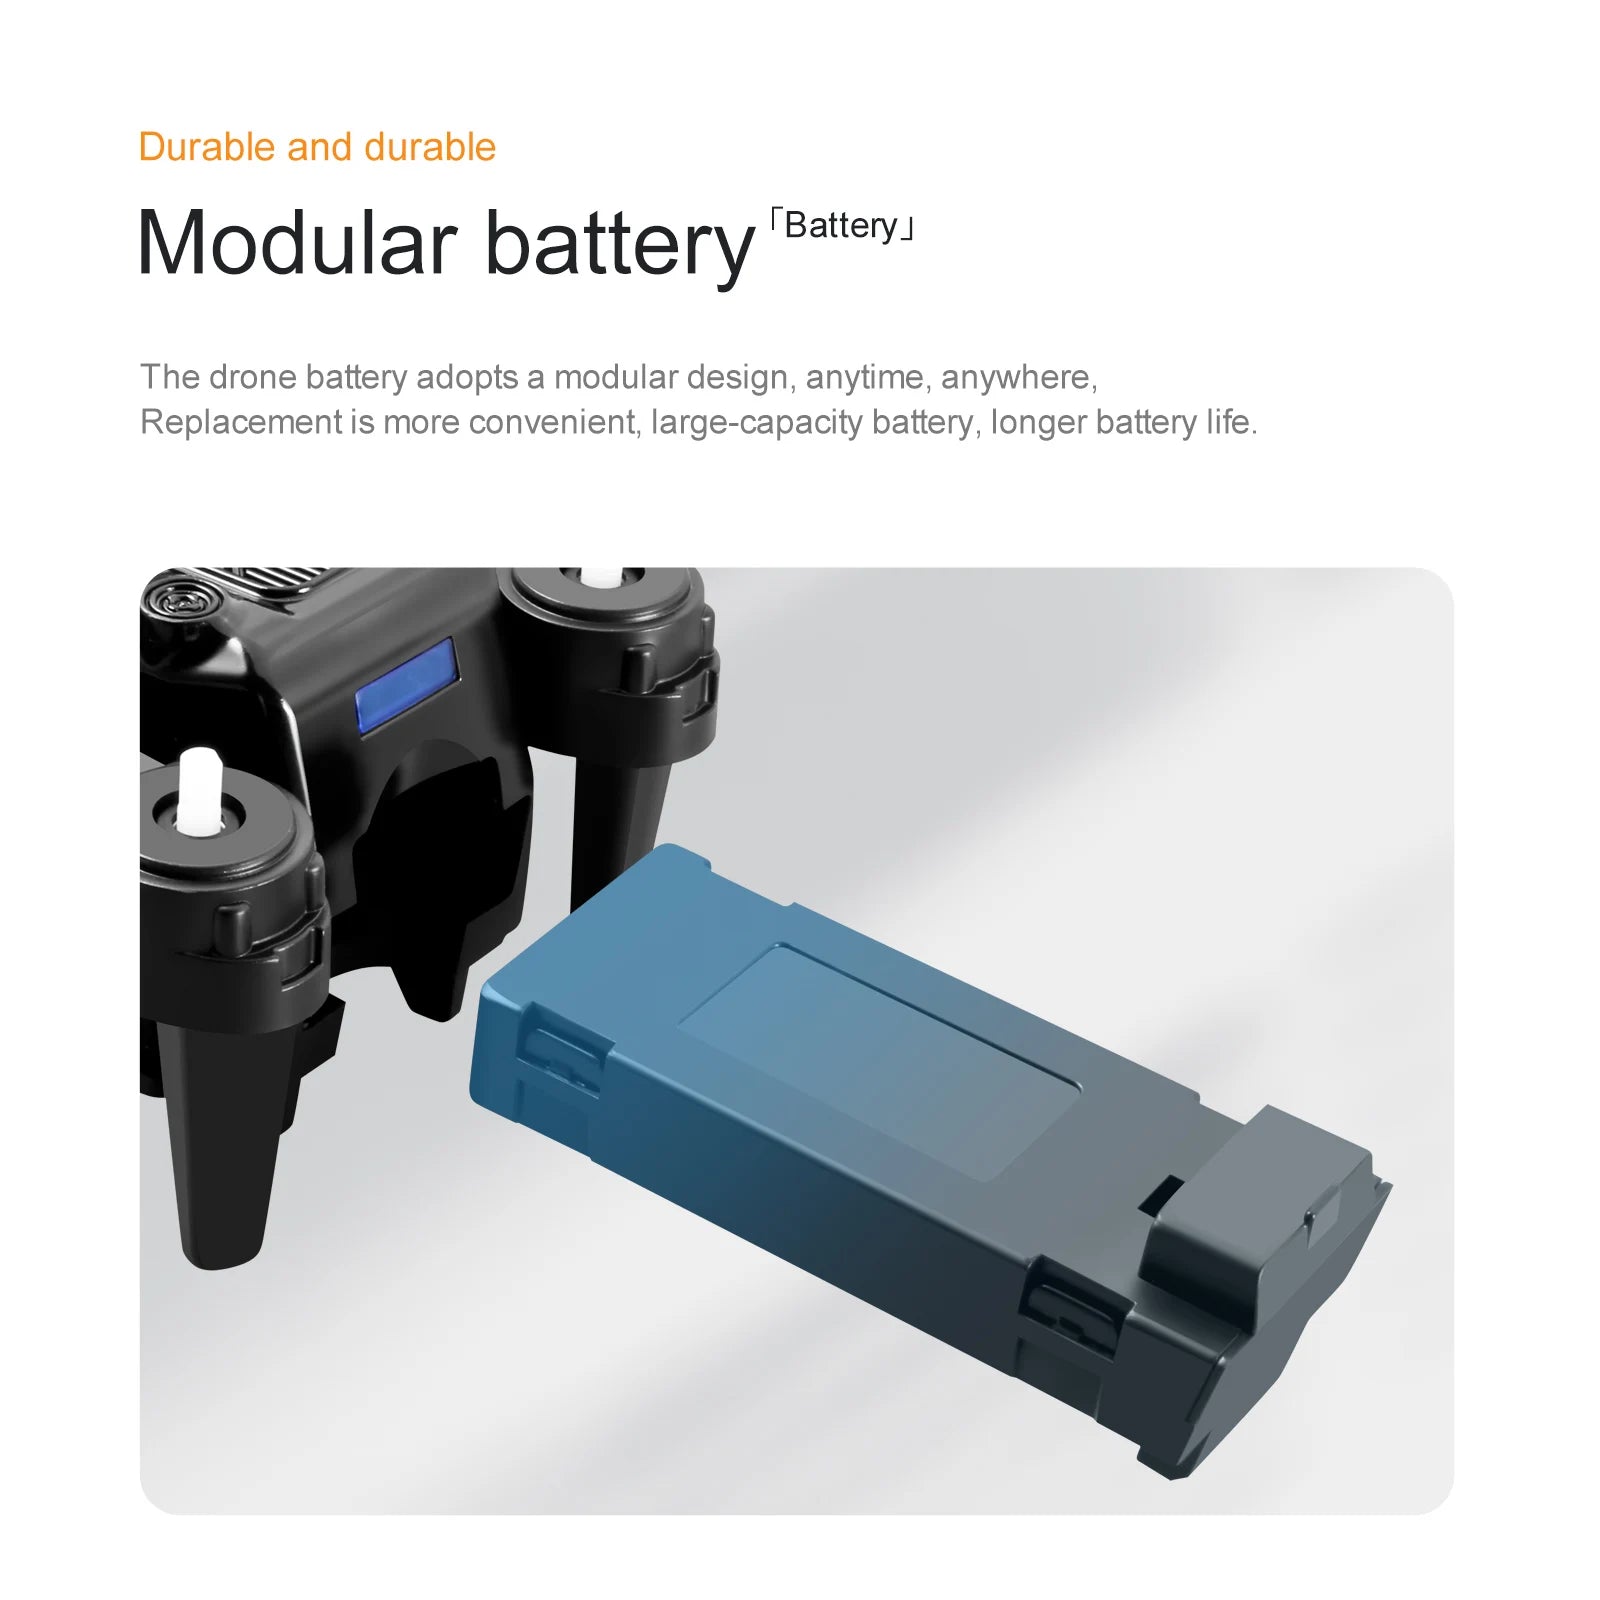 KBDFA E100 Mini Drone, durable and durable modular battery 'batterys the drone battery